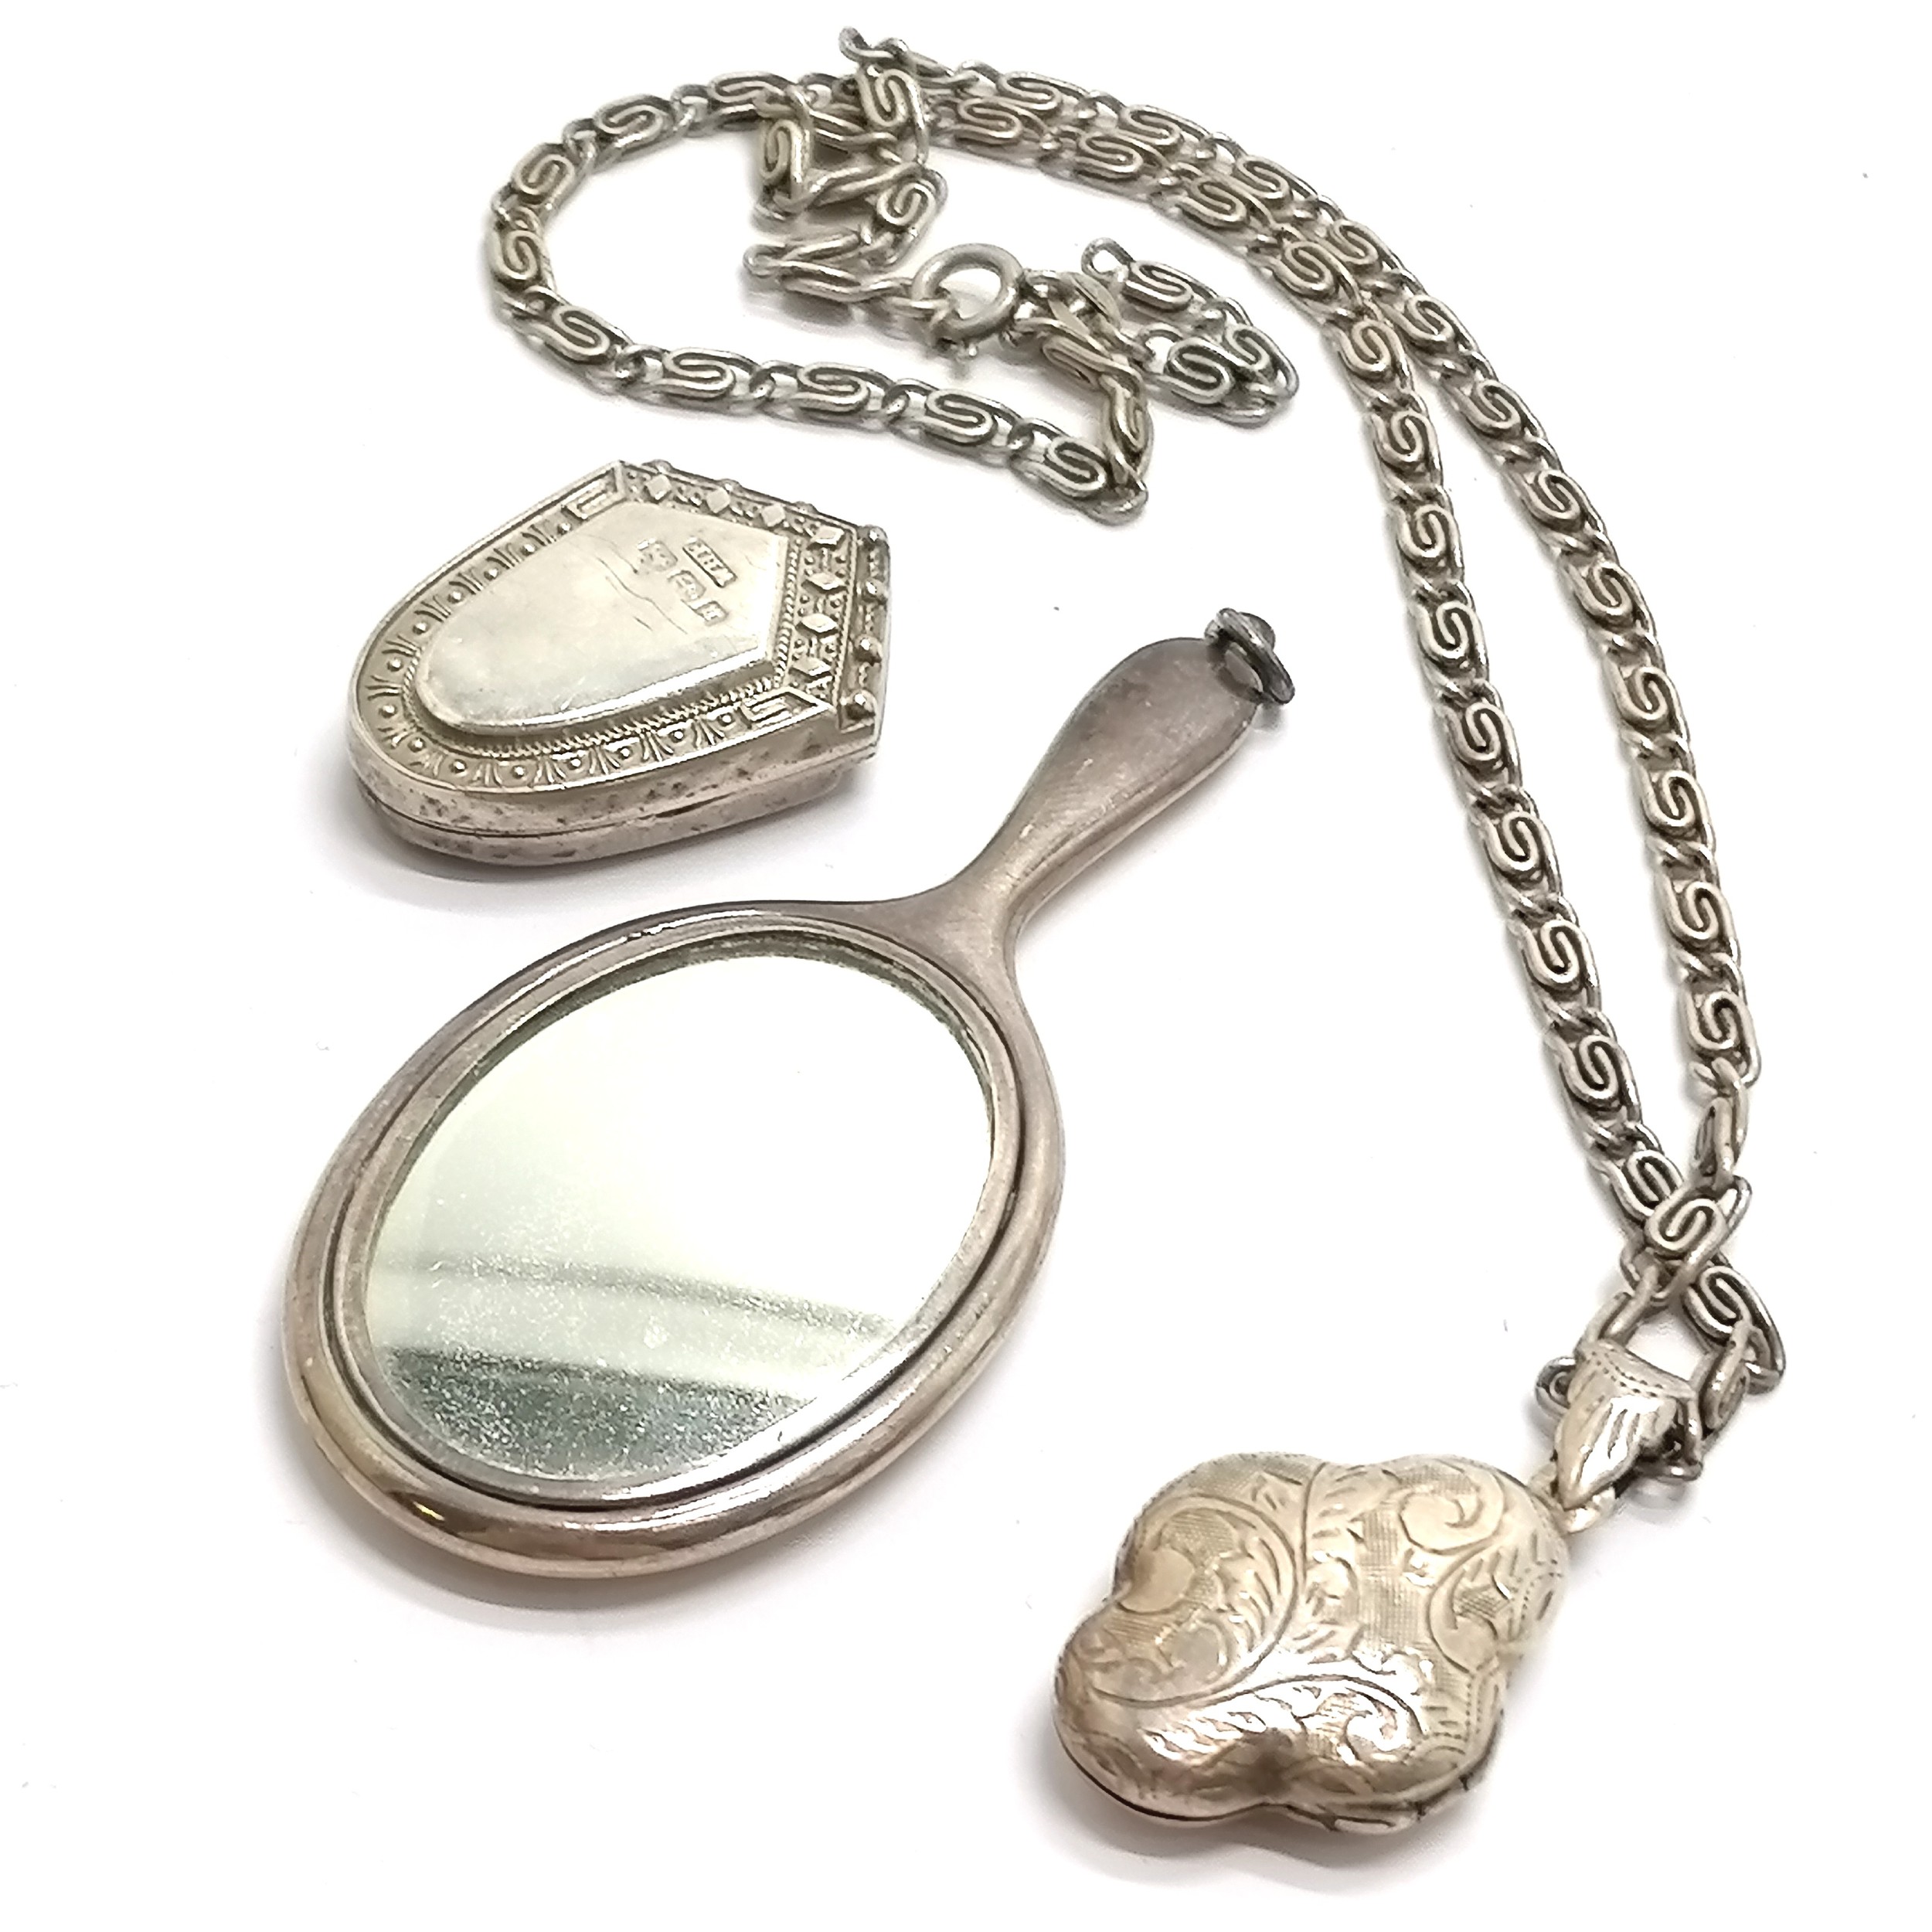 Antique miniature silver hallmarked mirror pendant t/w 2 silver lockets (1 on silver chain) - the